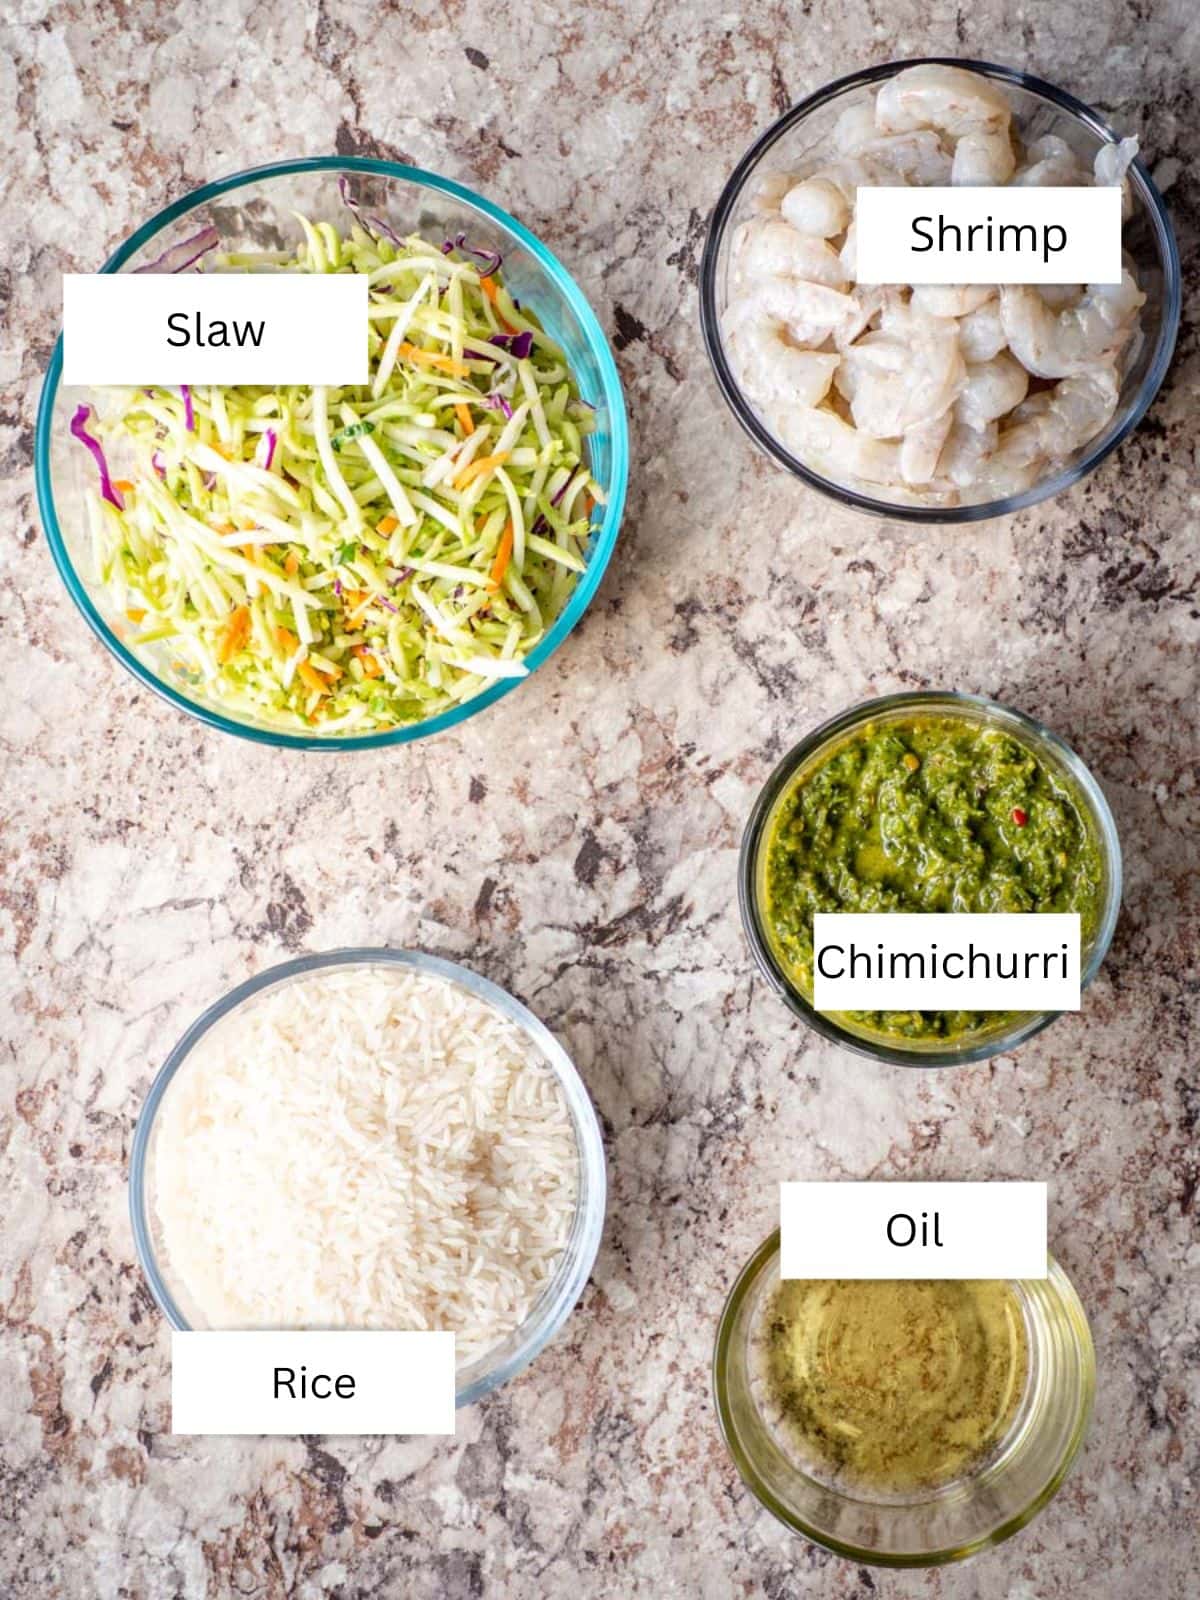 Ingredients for chimichurri shrimp bowls.